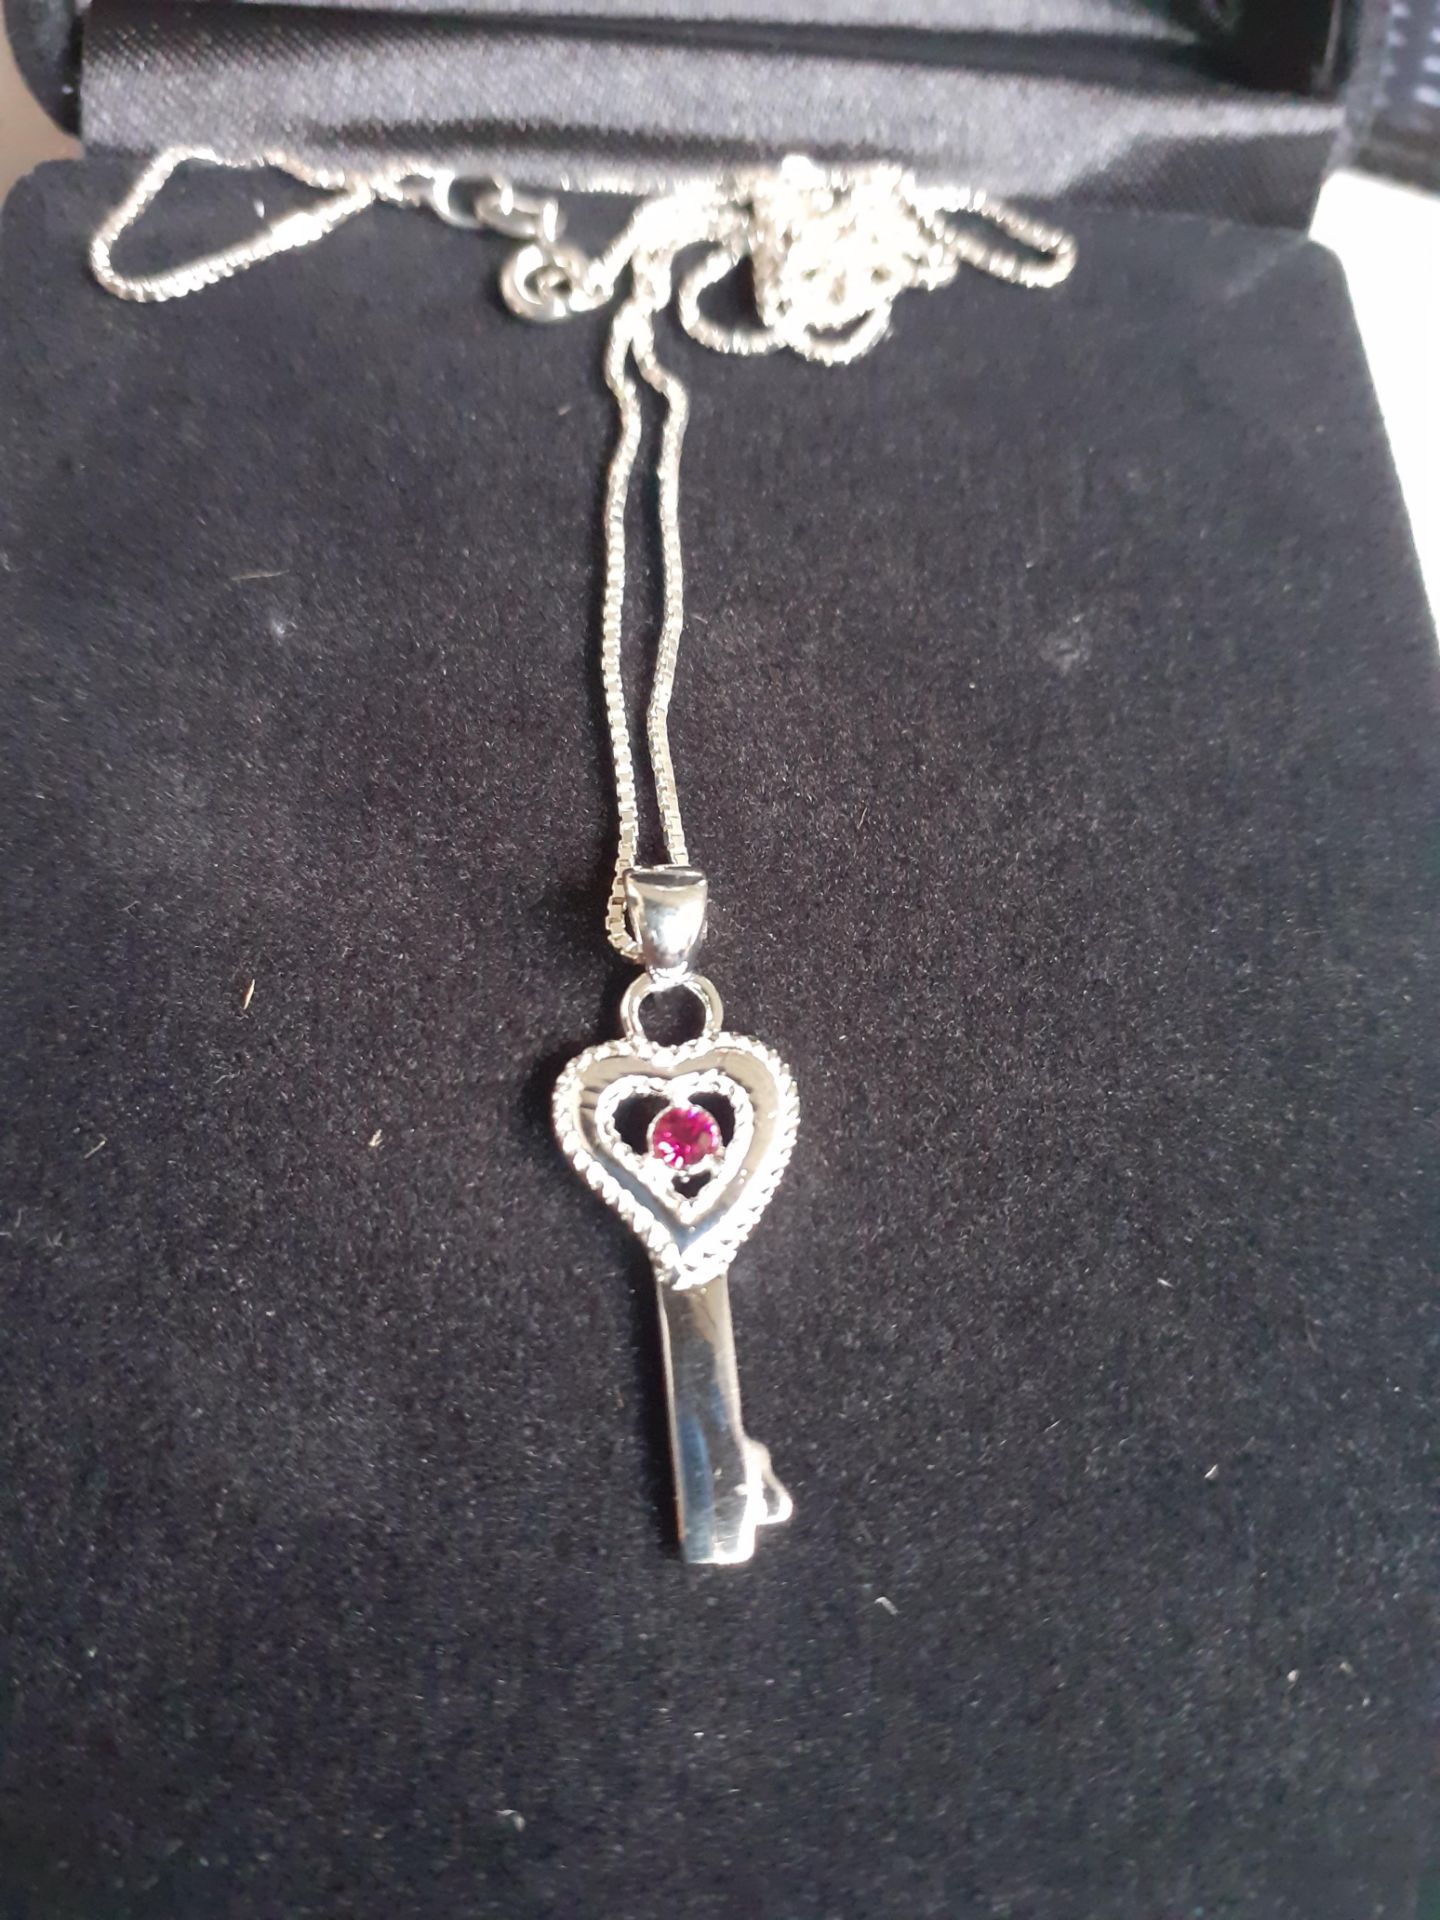 Brand new x5 silver key necklace with gem